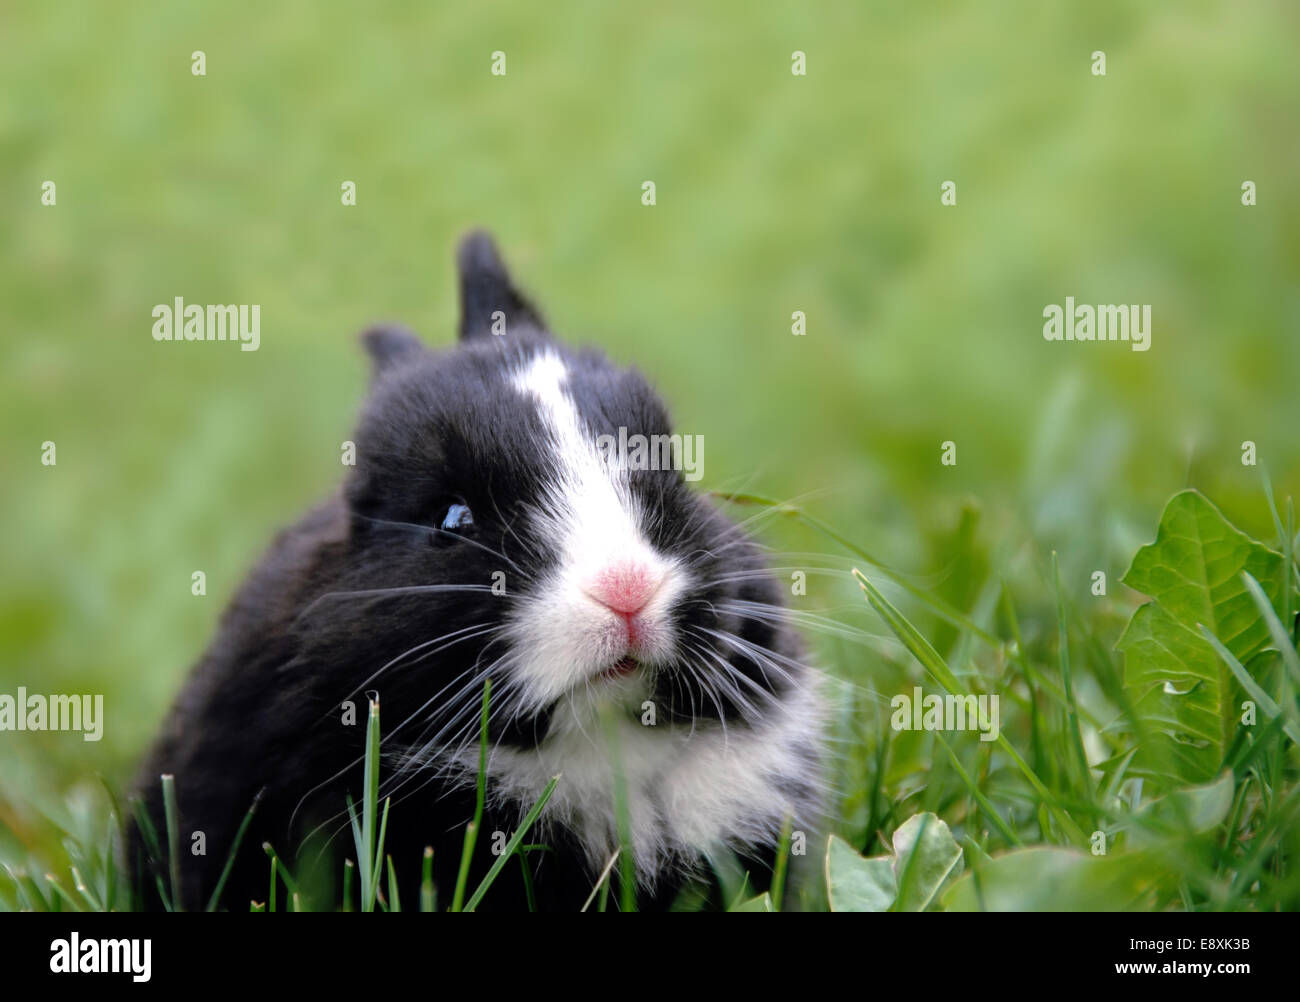 Black rabbit in grass Banque D'Images